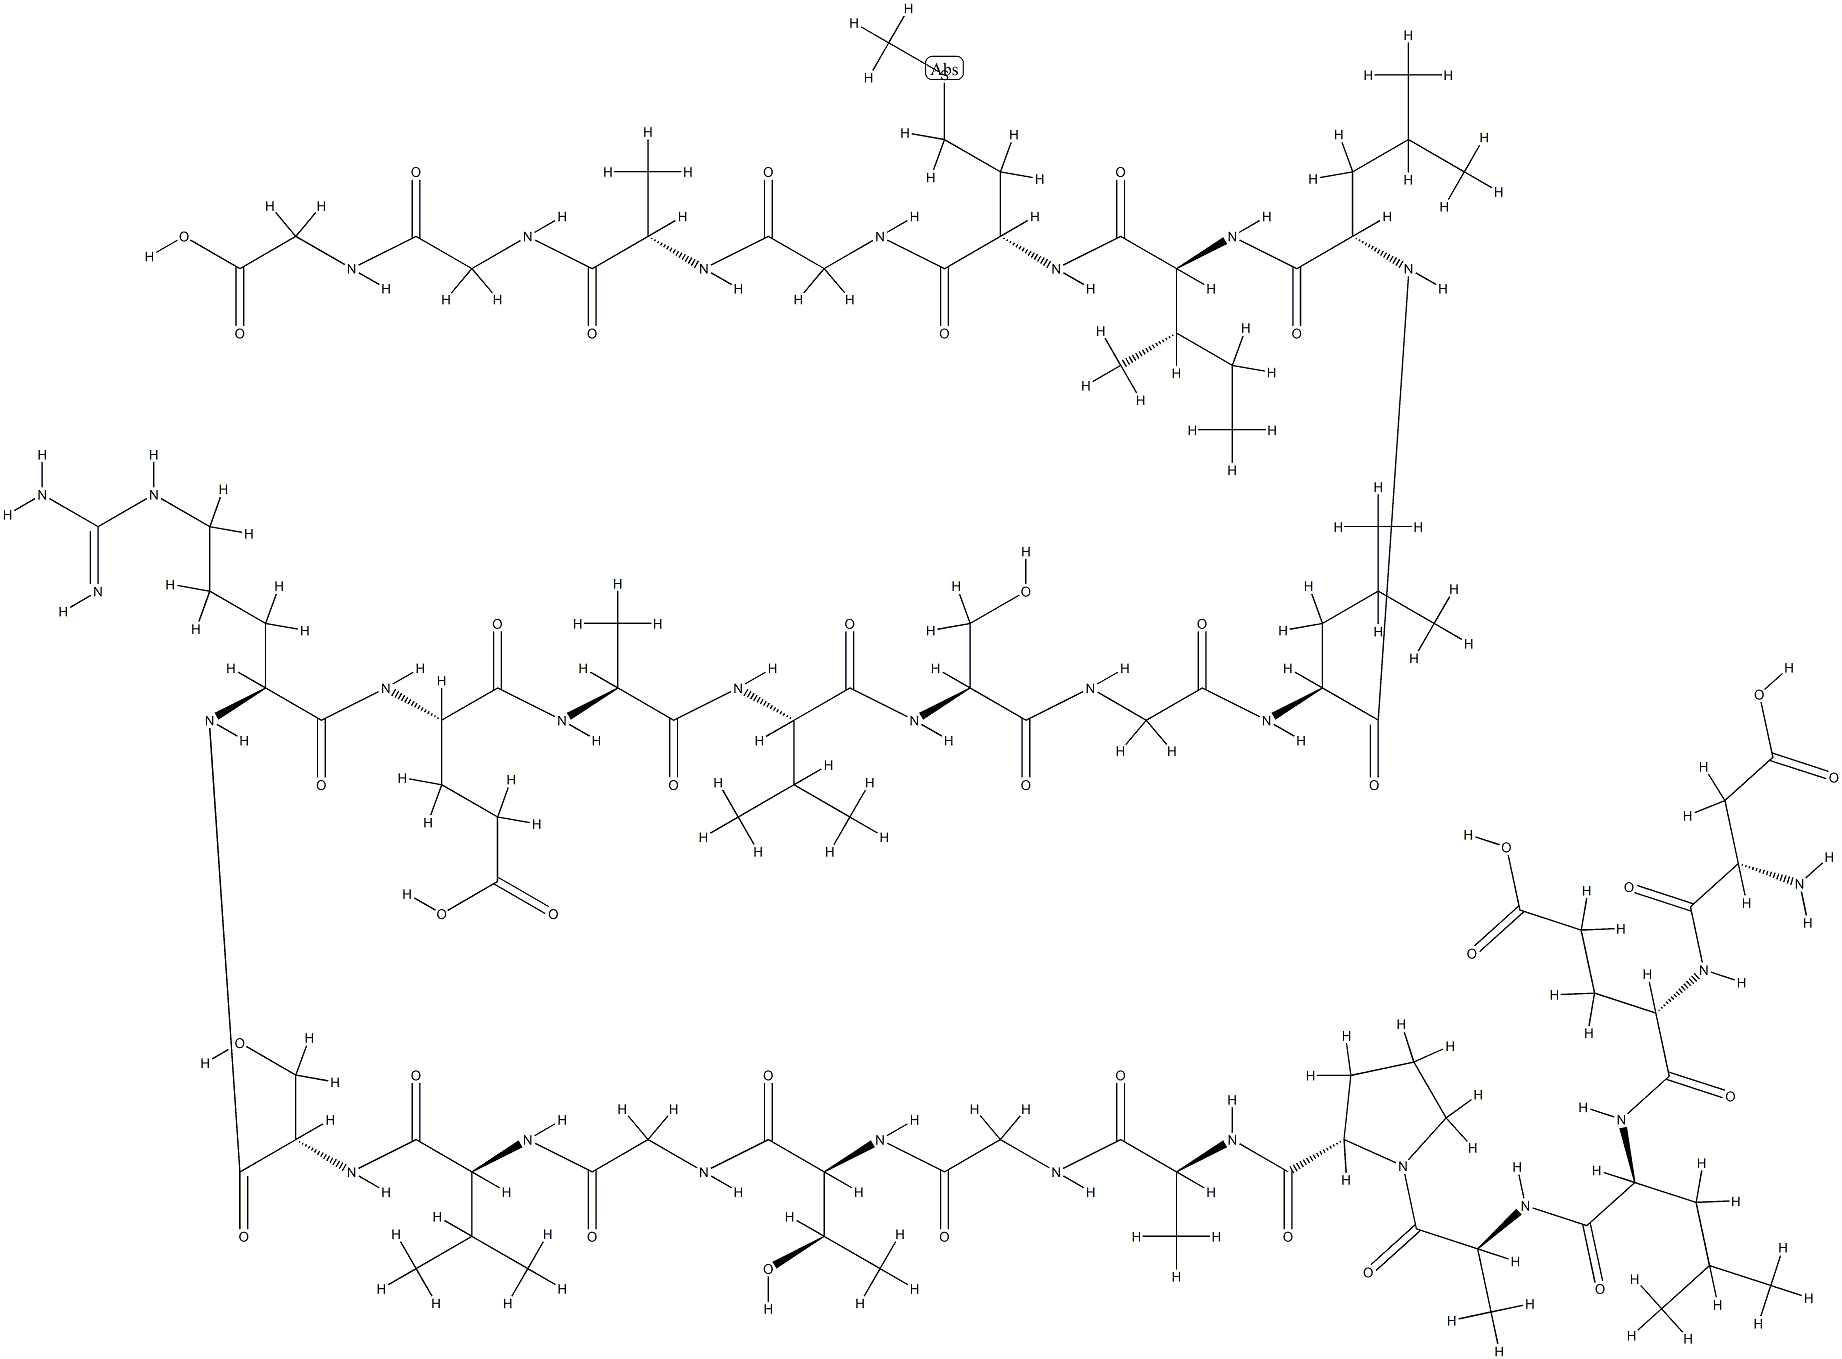 APLP1-derived Ab-like peptide (1-25)